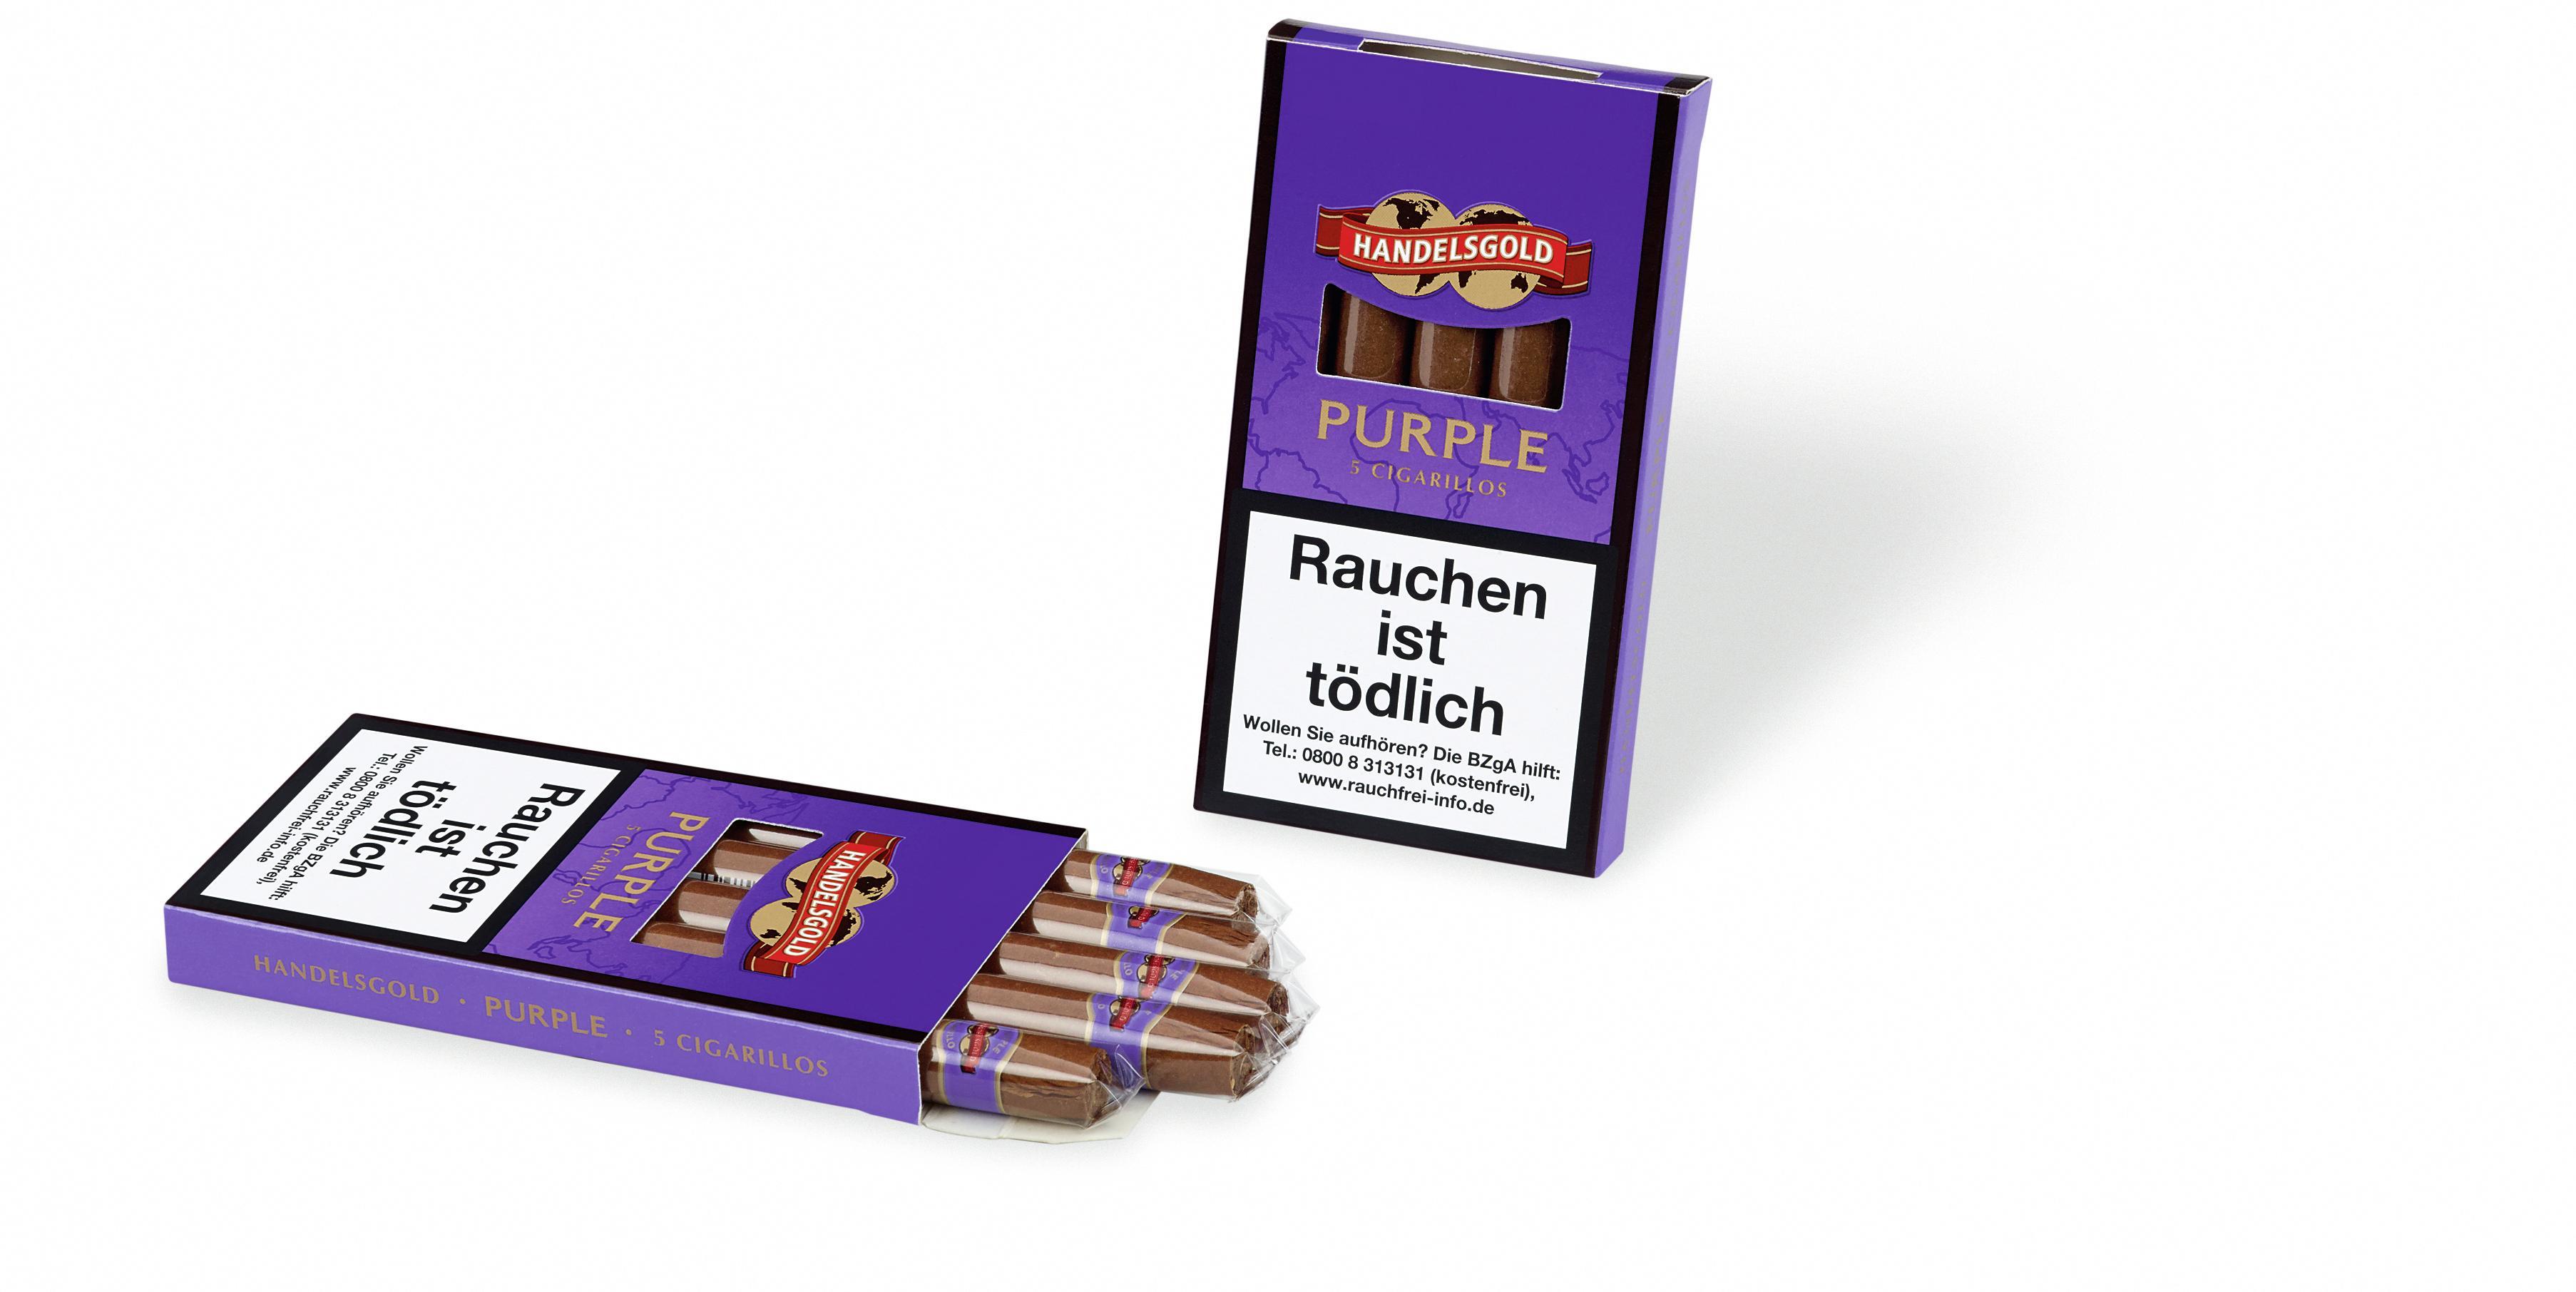 Handelsgold Sweet Purple Nr. 191 10 x 5 Zigarillos